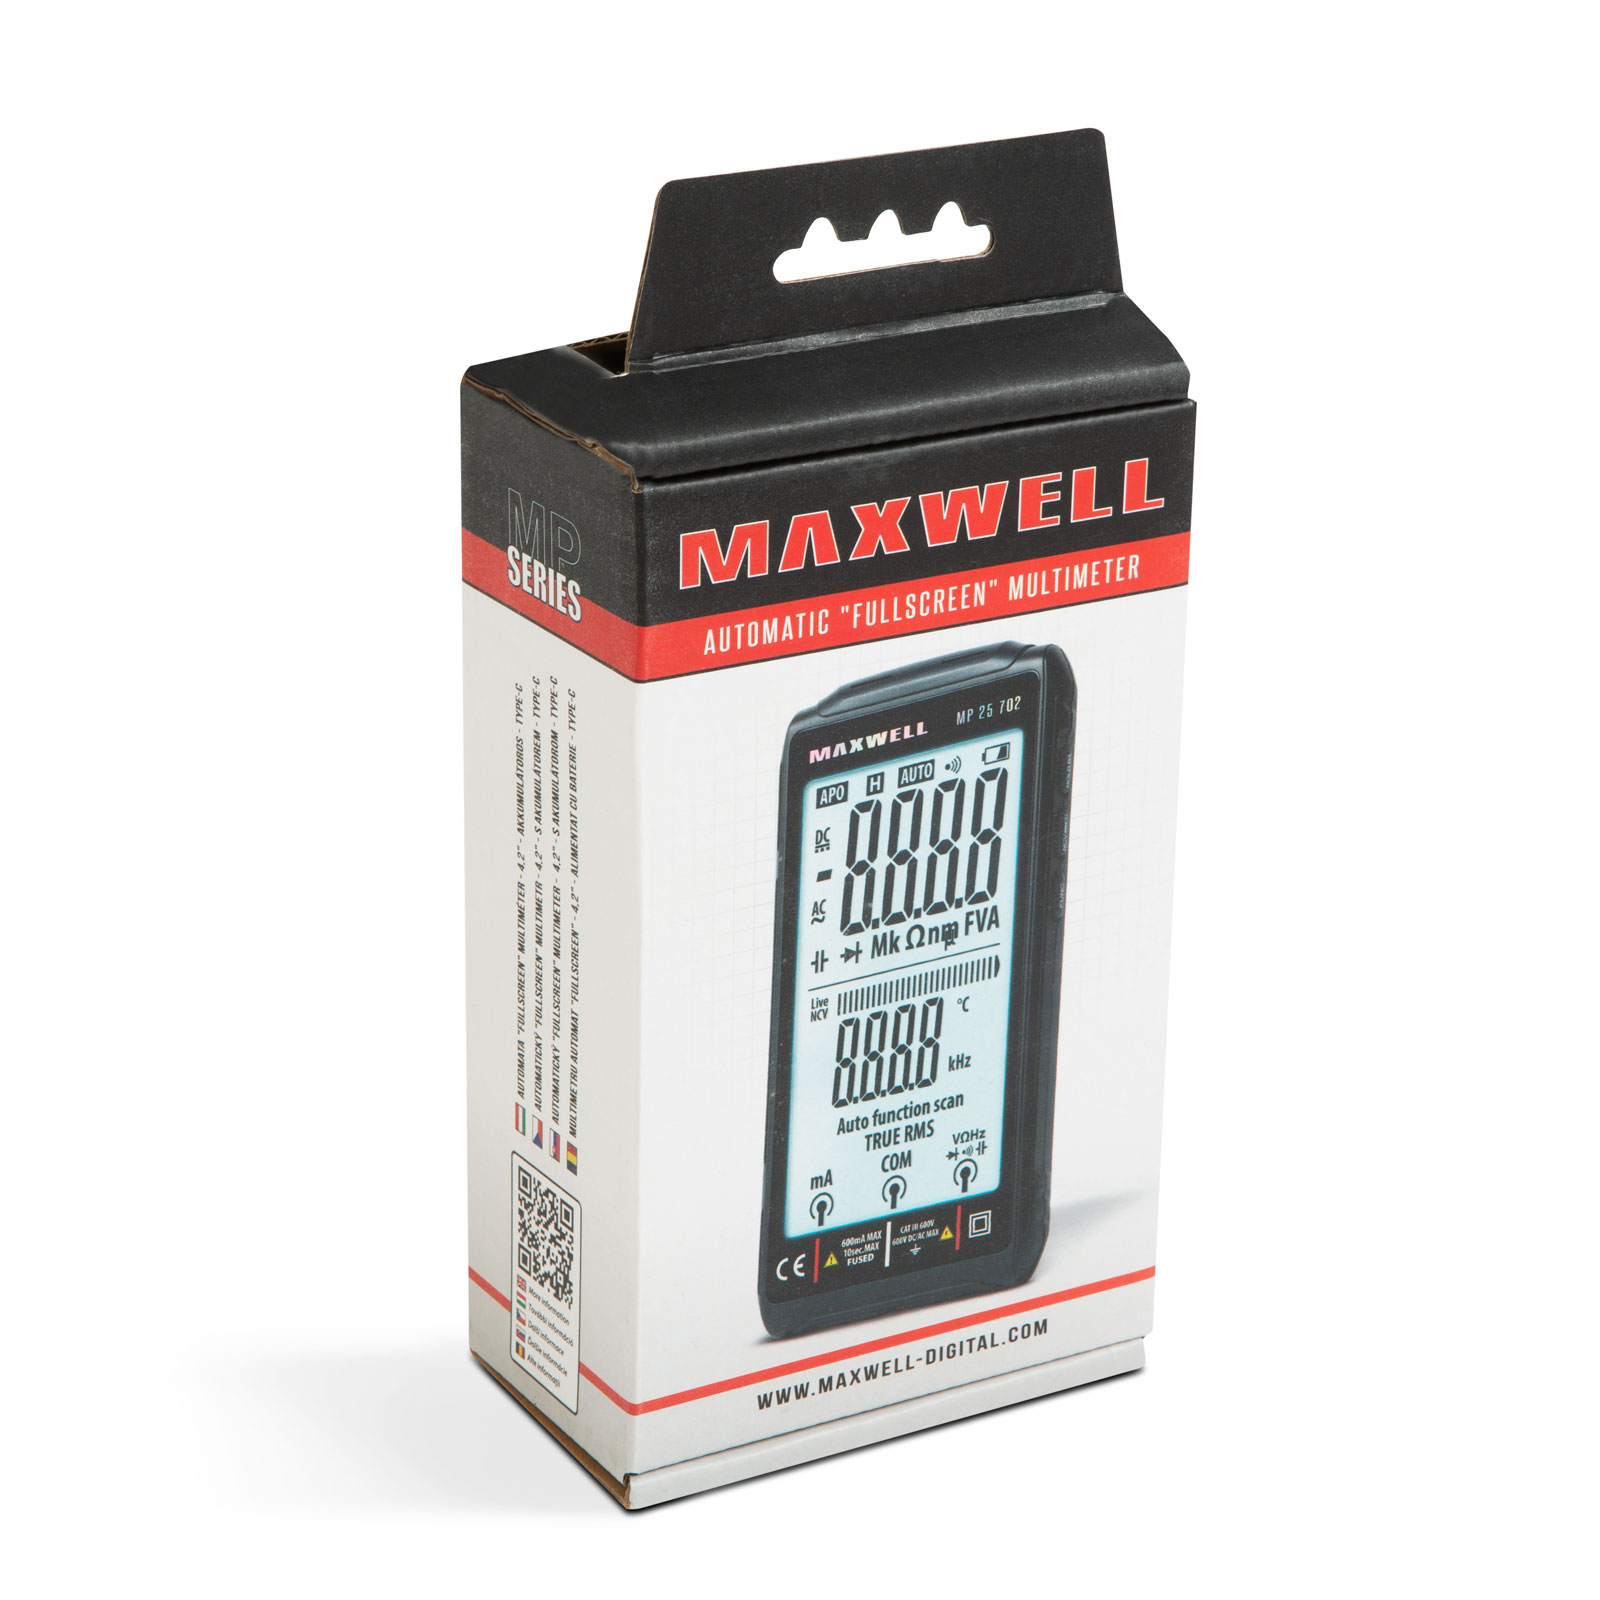 Maxwell 25702 Automata “FullScreen” multiméter – 4,2″ – akkumulátoros – Type-C